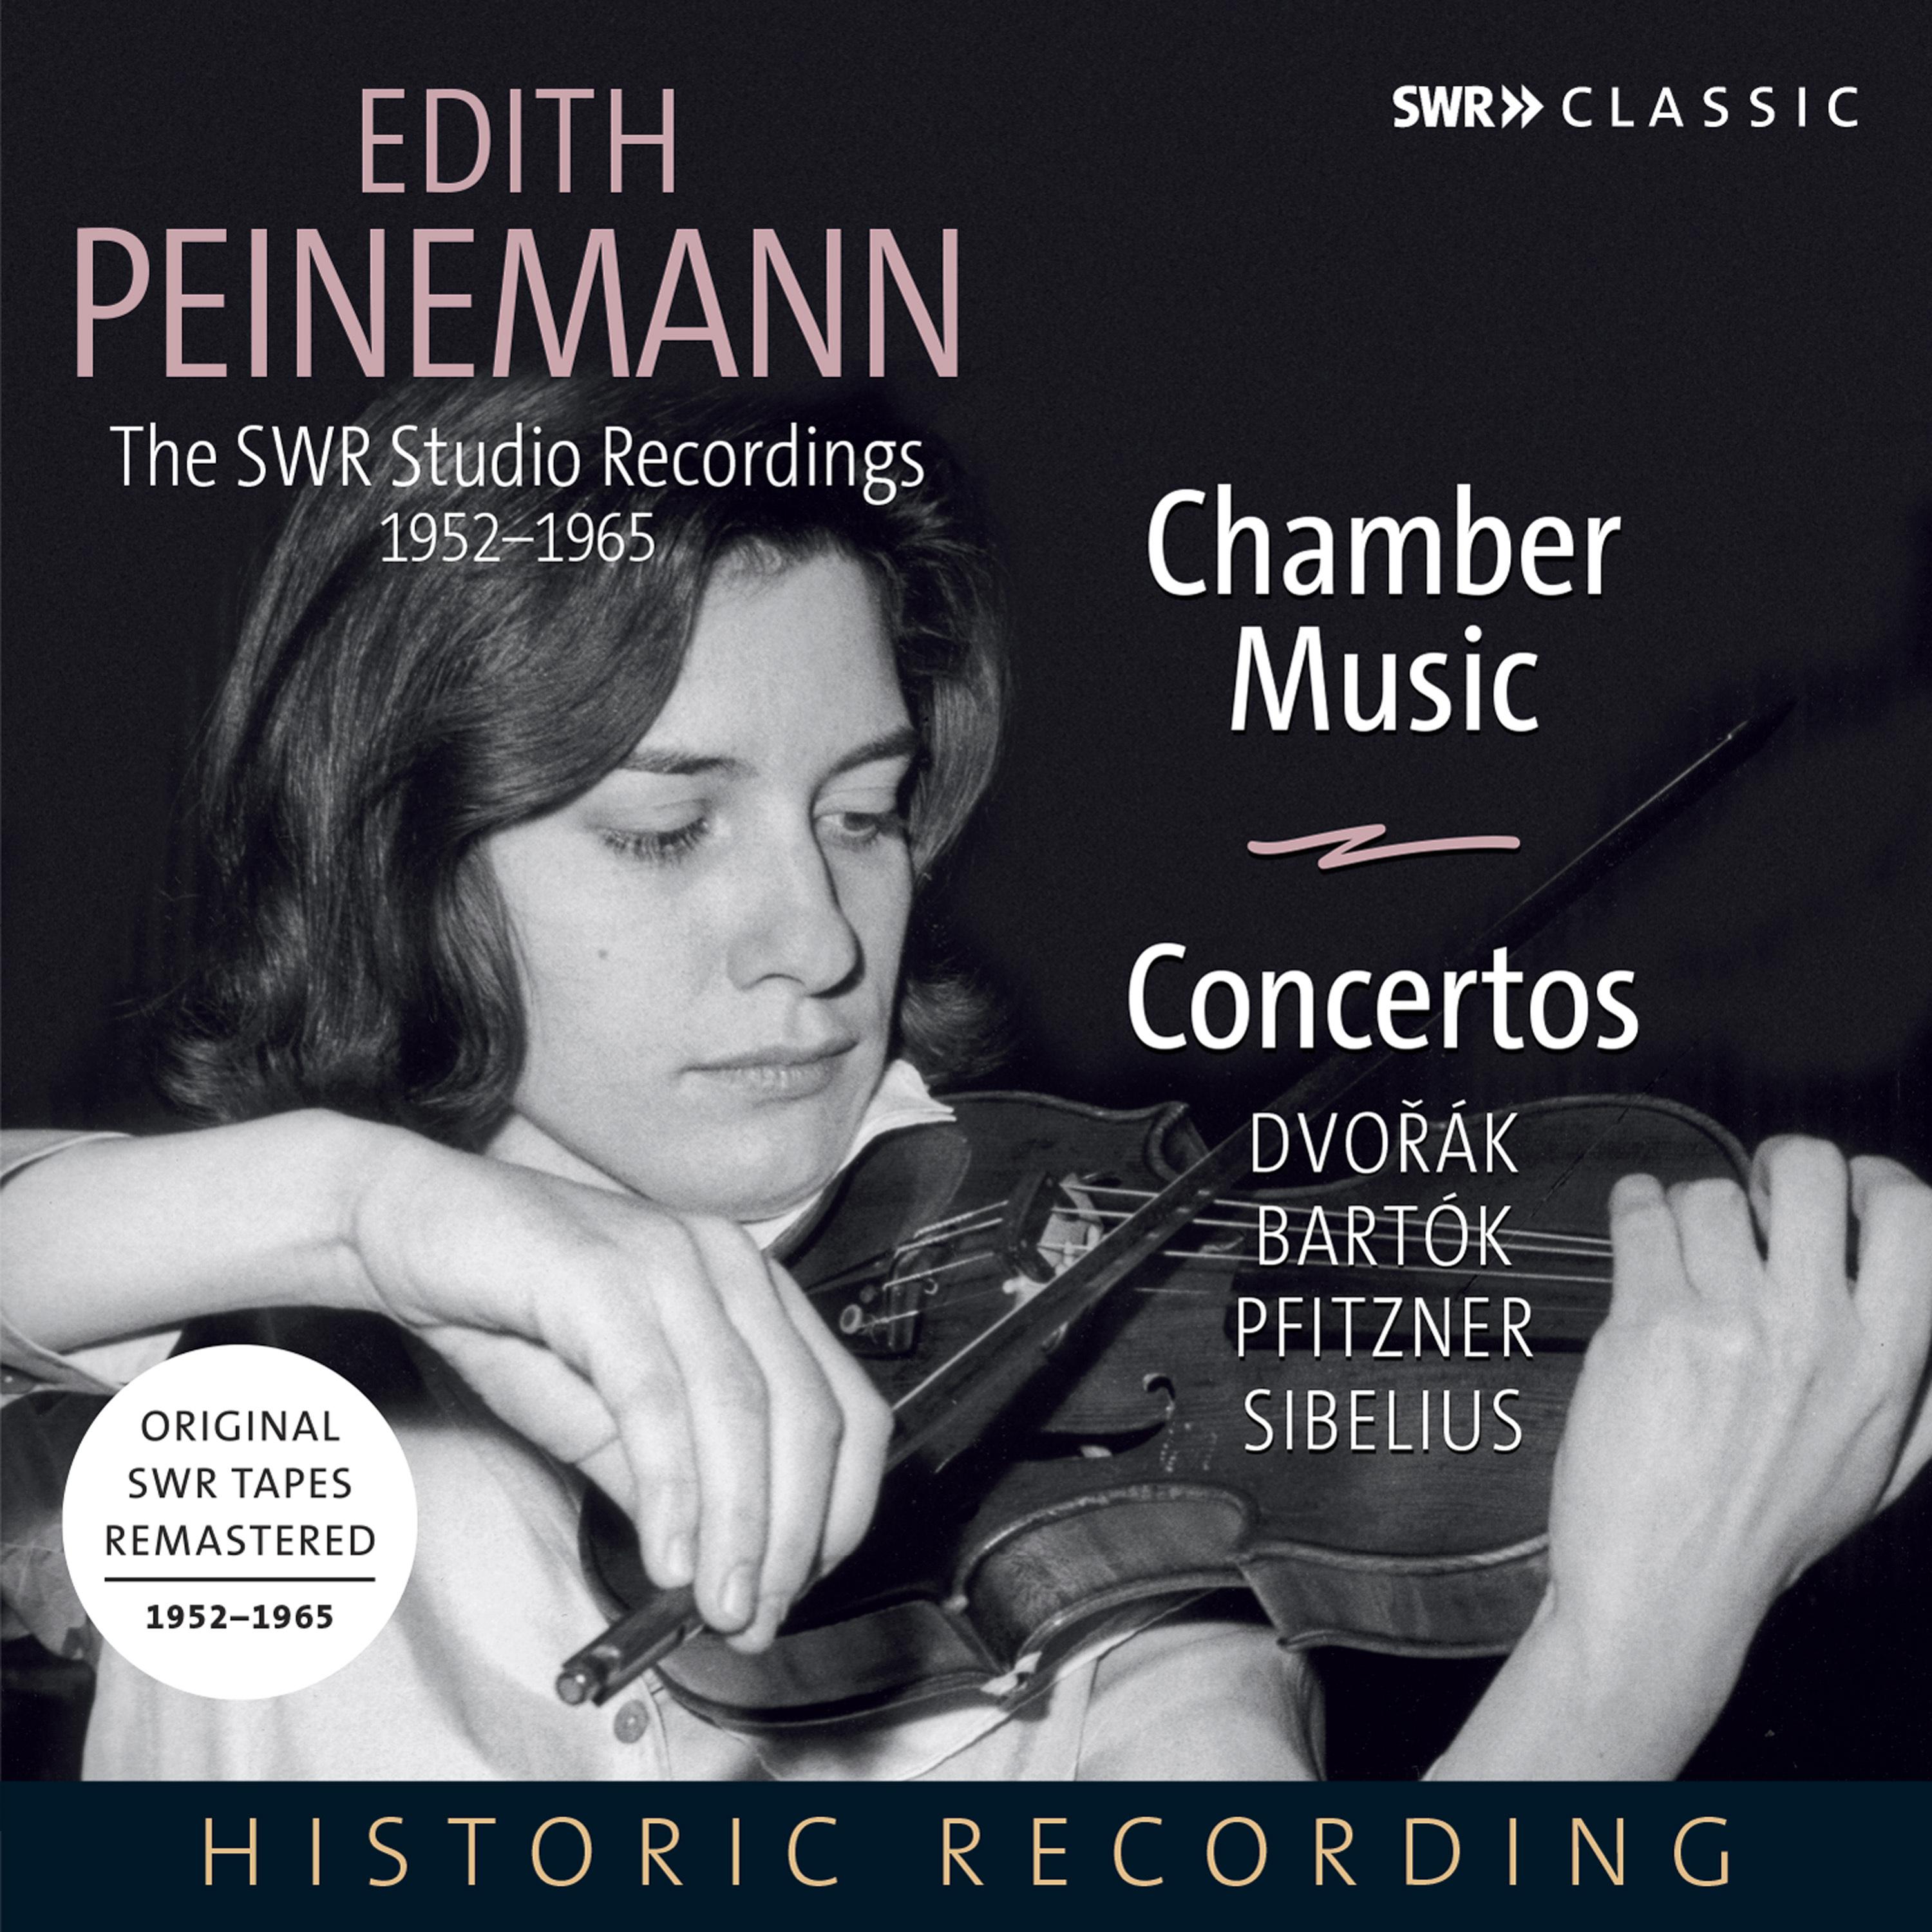 Edith Peinemann - Violin Sonata No. 26 in B-Flat Major, K. 378:I. Allegro moderato